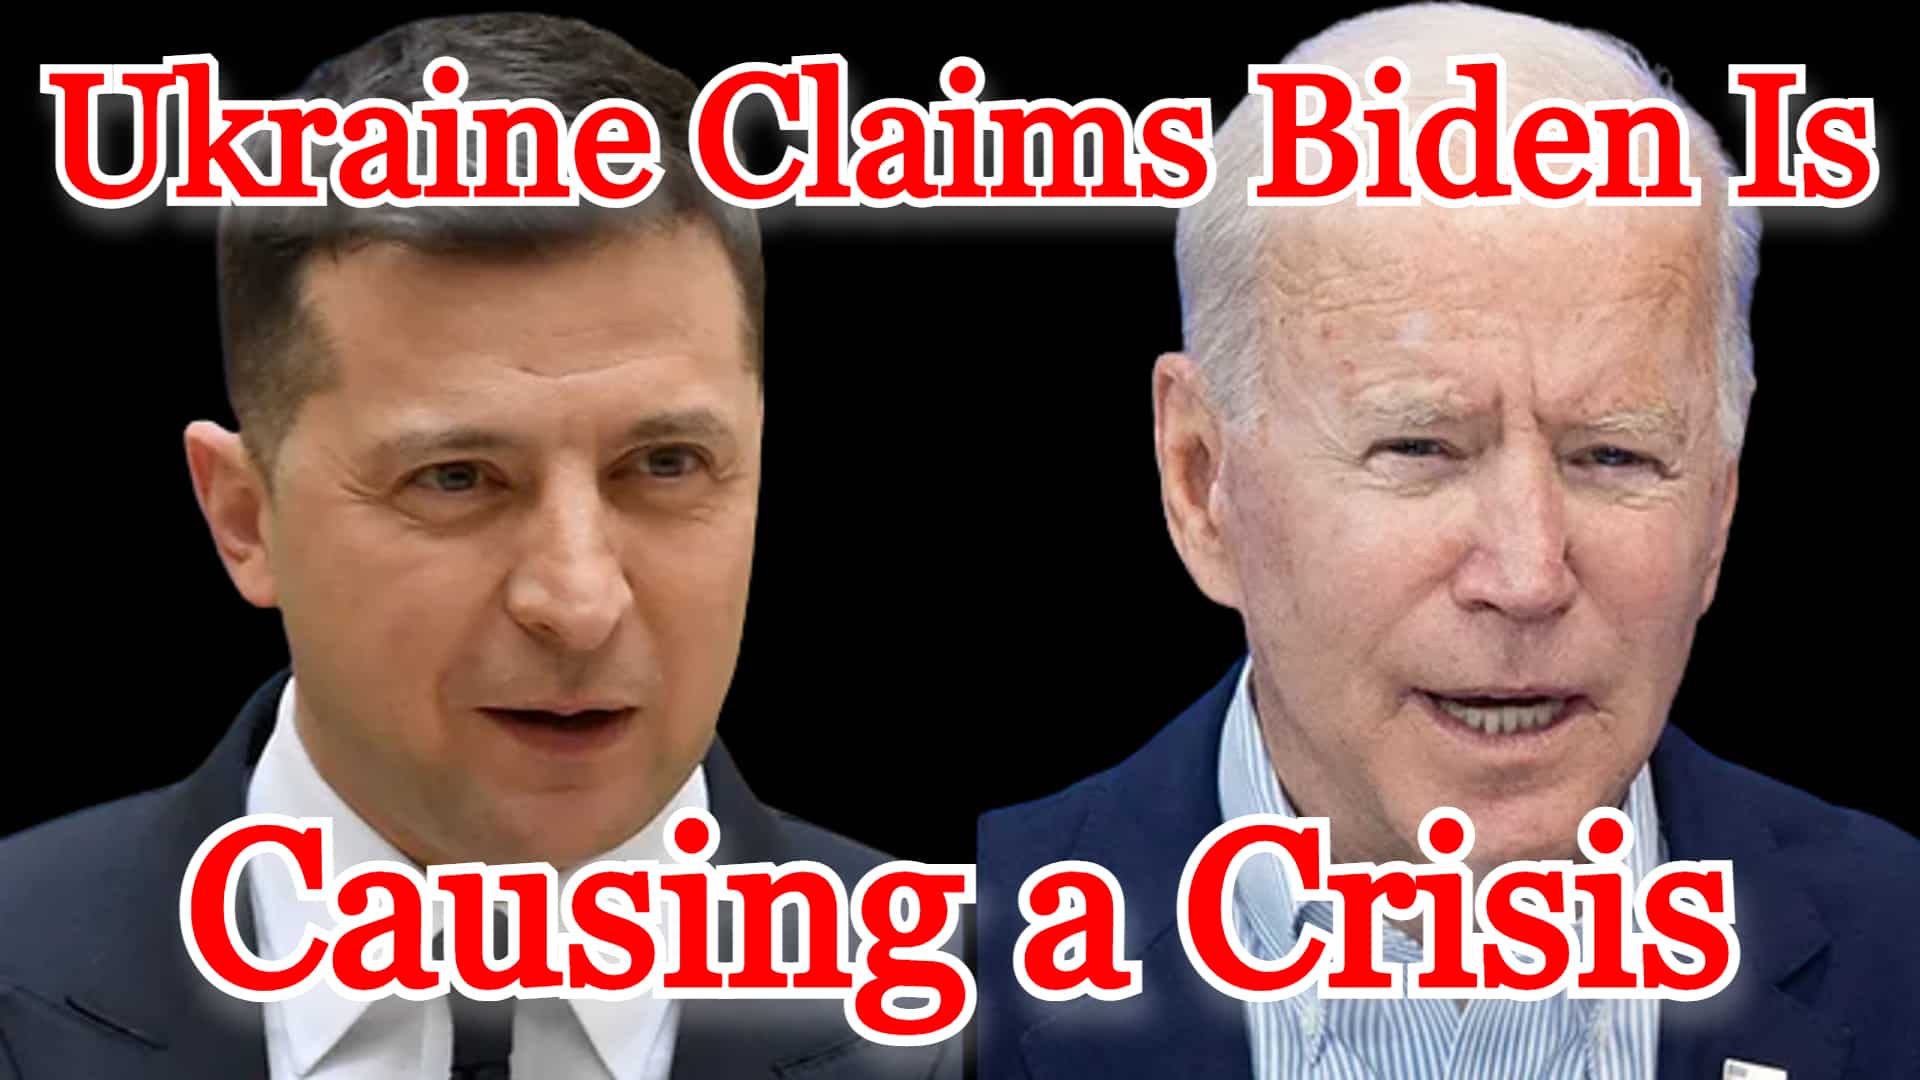 COI #224: Ukraine Claims Biden Is Causing a Crisis